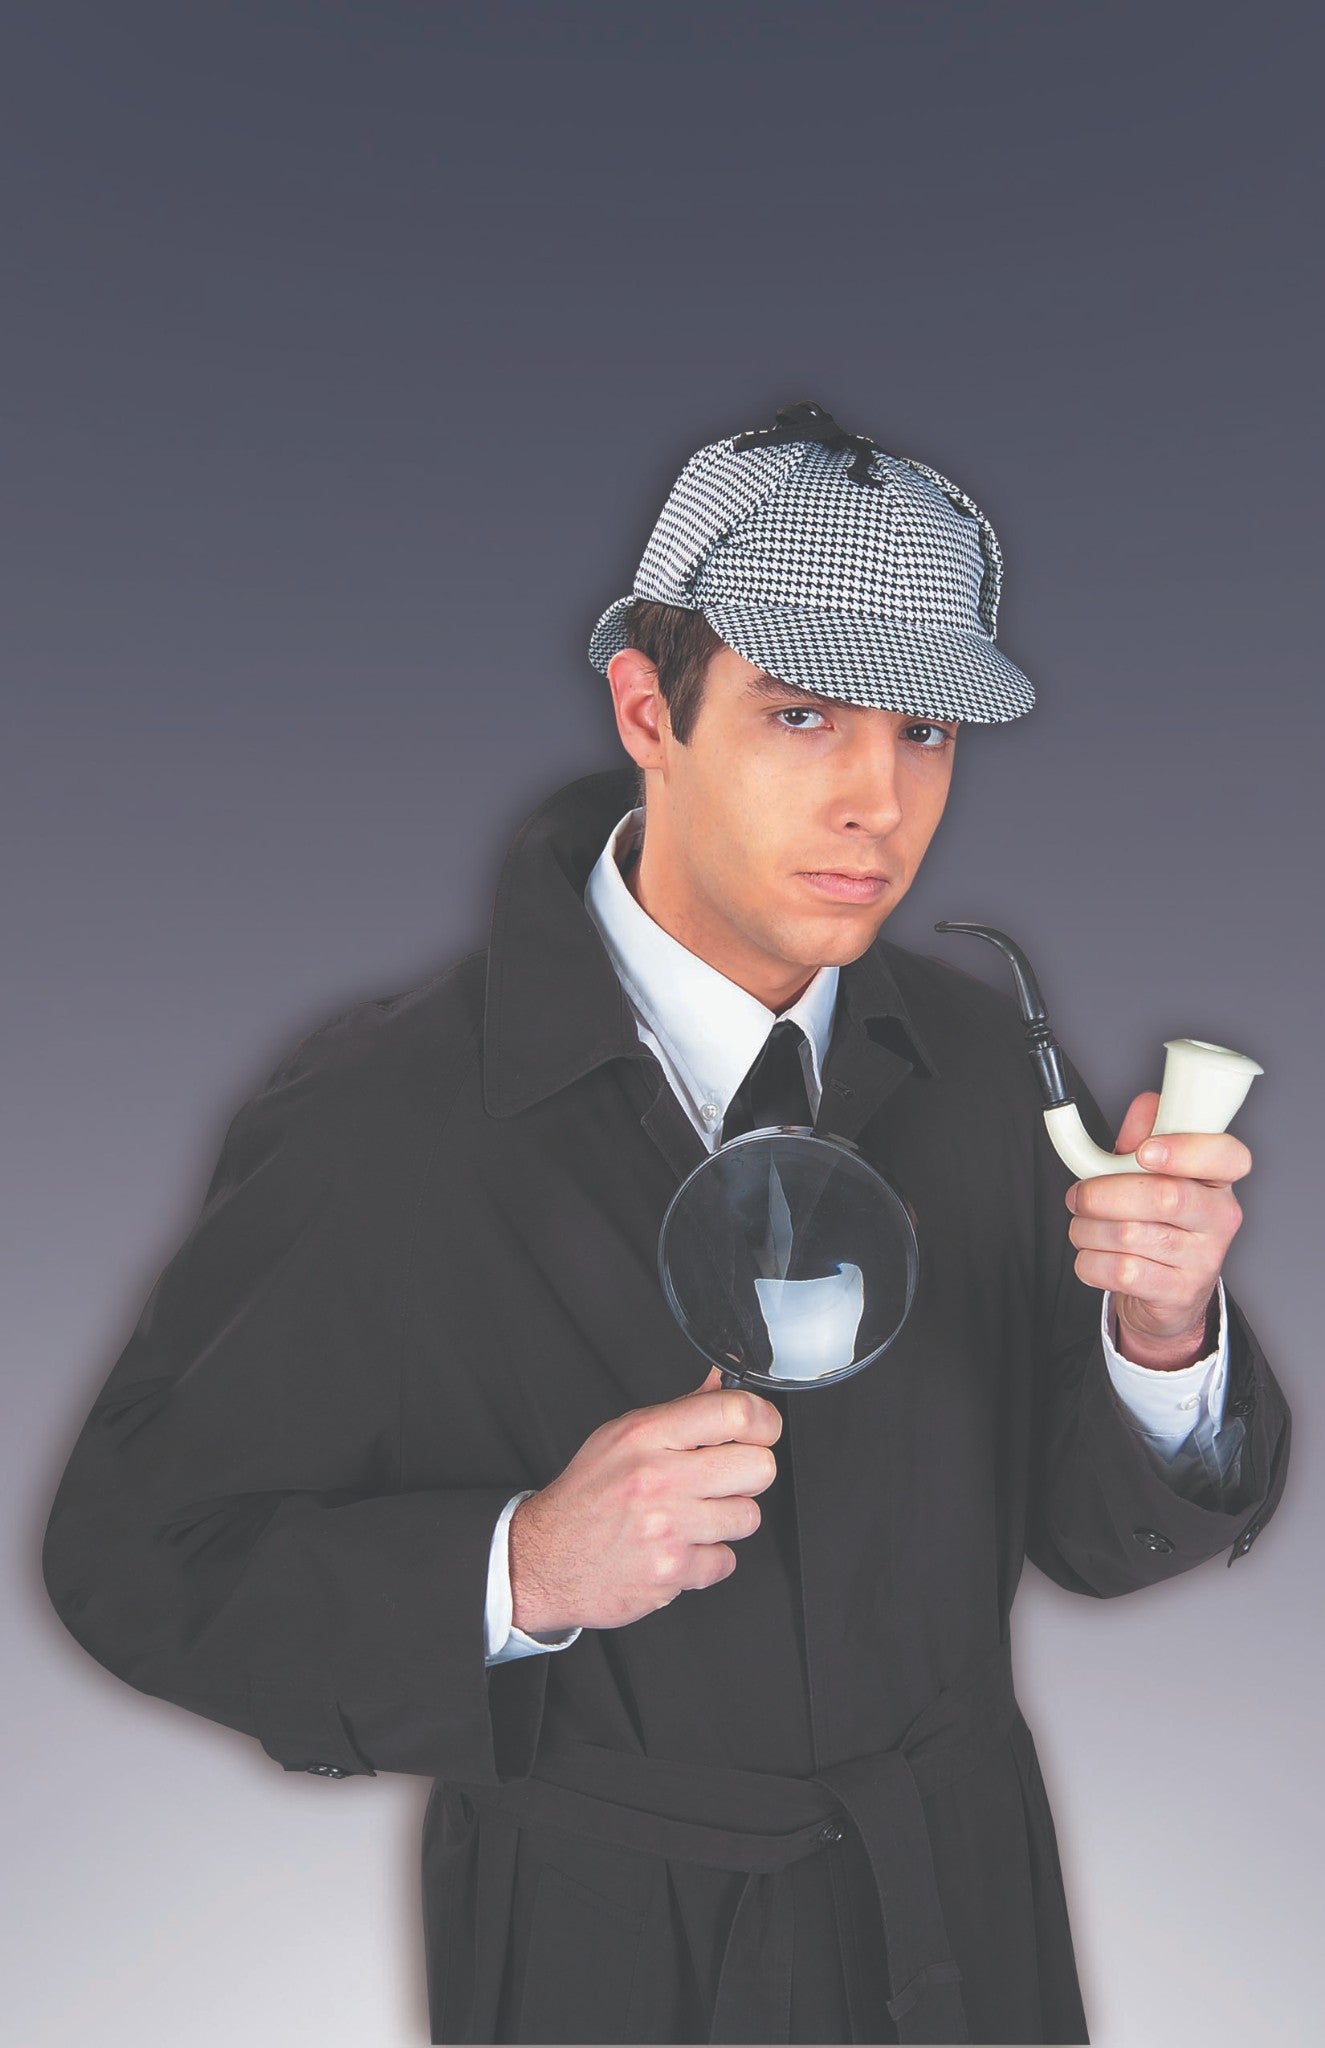 Sherlock Holmes Kit - British Detective - Costume Accessory - Adult Teen